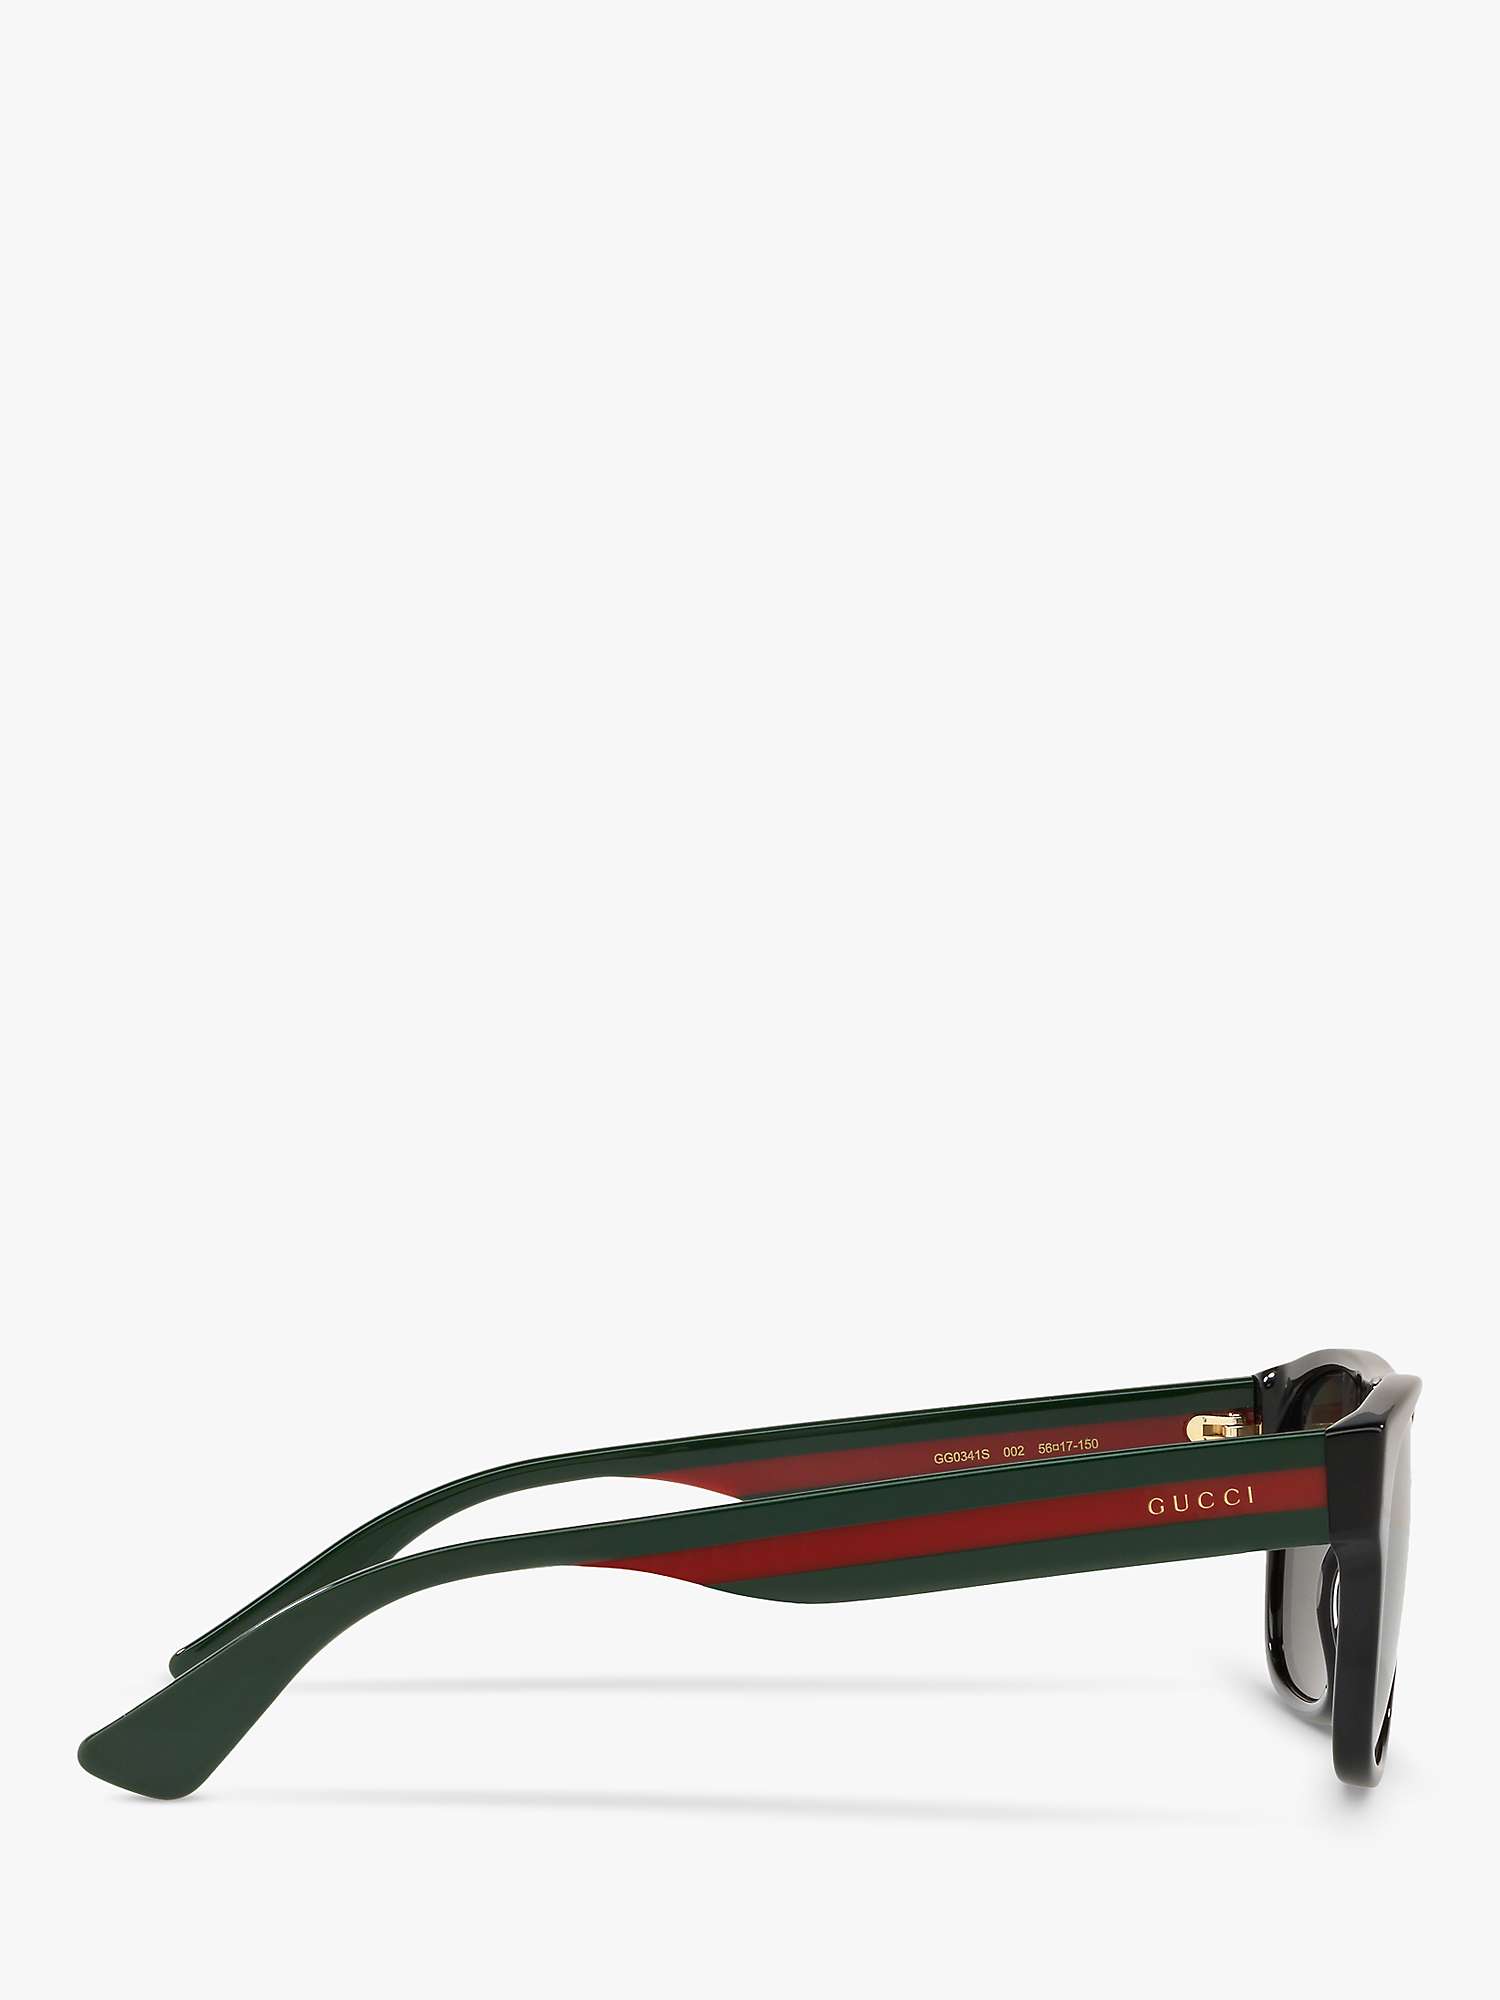 Buy Gucci GG0341S Men's Polarised Rectangular Sunglasses, Black/Grey Online at johnlewis.com